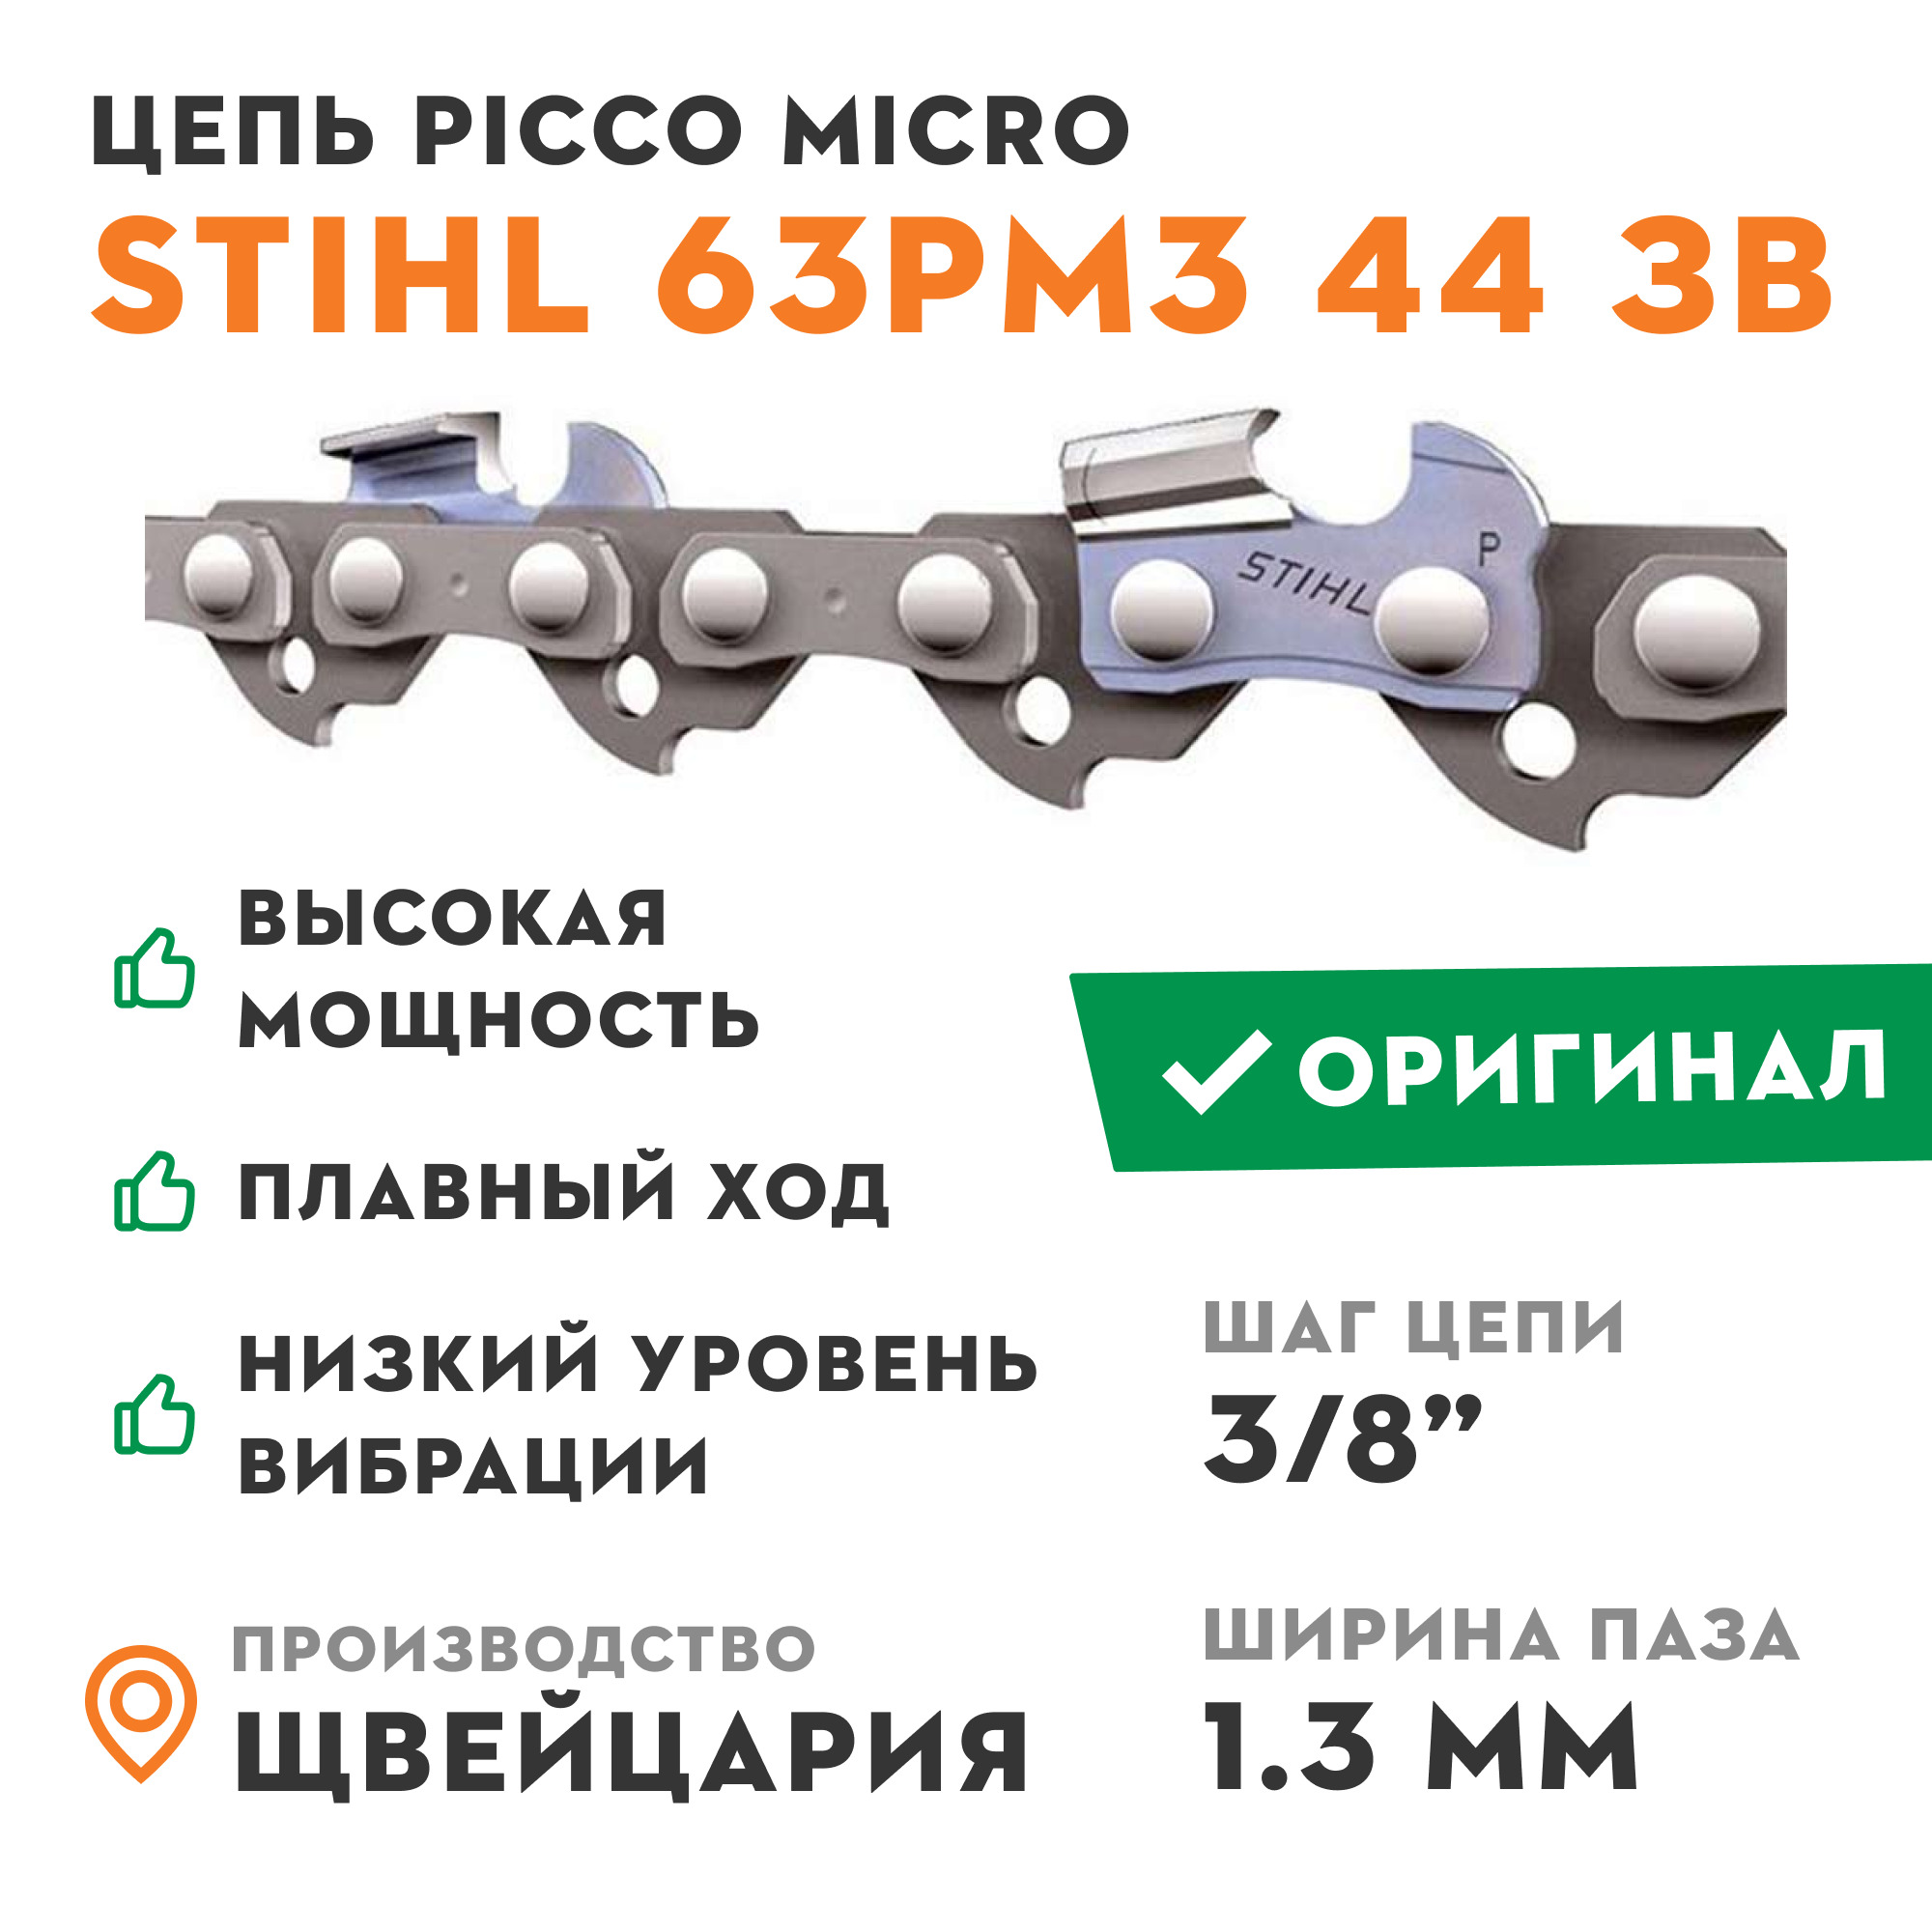 Штиль бензопила цепь сколько звеньев. Цепь для бензопилы Stihl 63 PM Picco Micro, 1.3 мм, шаг 3/8"p, 55 звеньев. Цепь штиль 55 звеньев 3/8 шаг 1.3. Цепь 72 звена Stihl. Цепь для бензопилы Stihl 63pm 3/8" 1.3 мм 16" 55 зв..